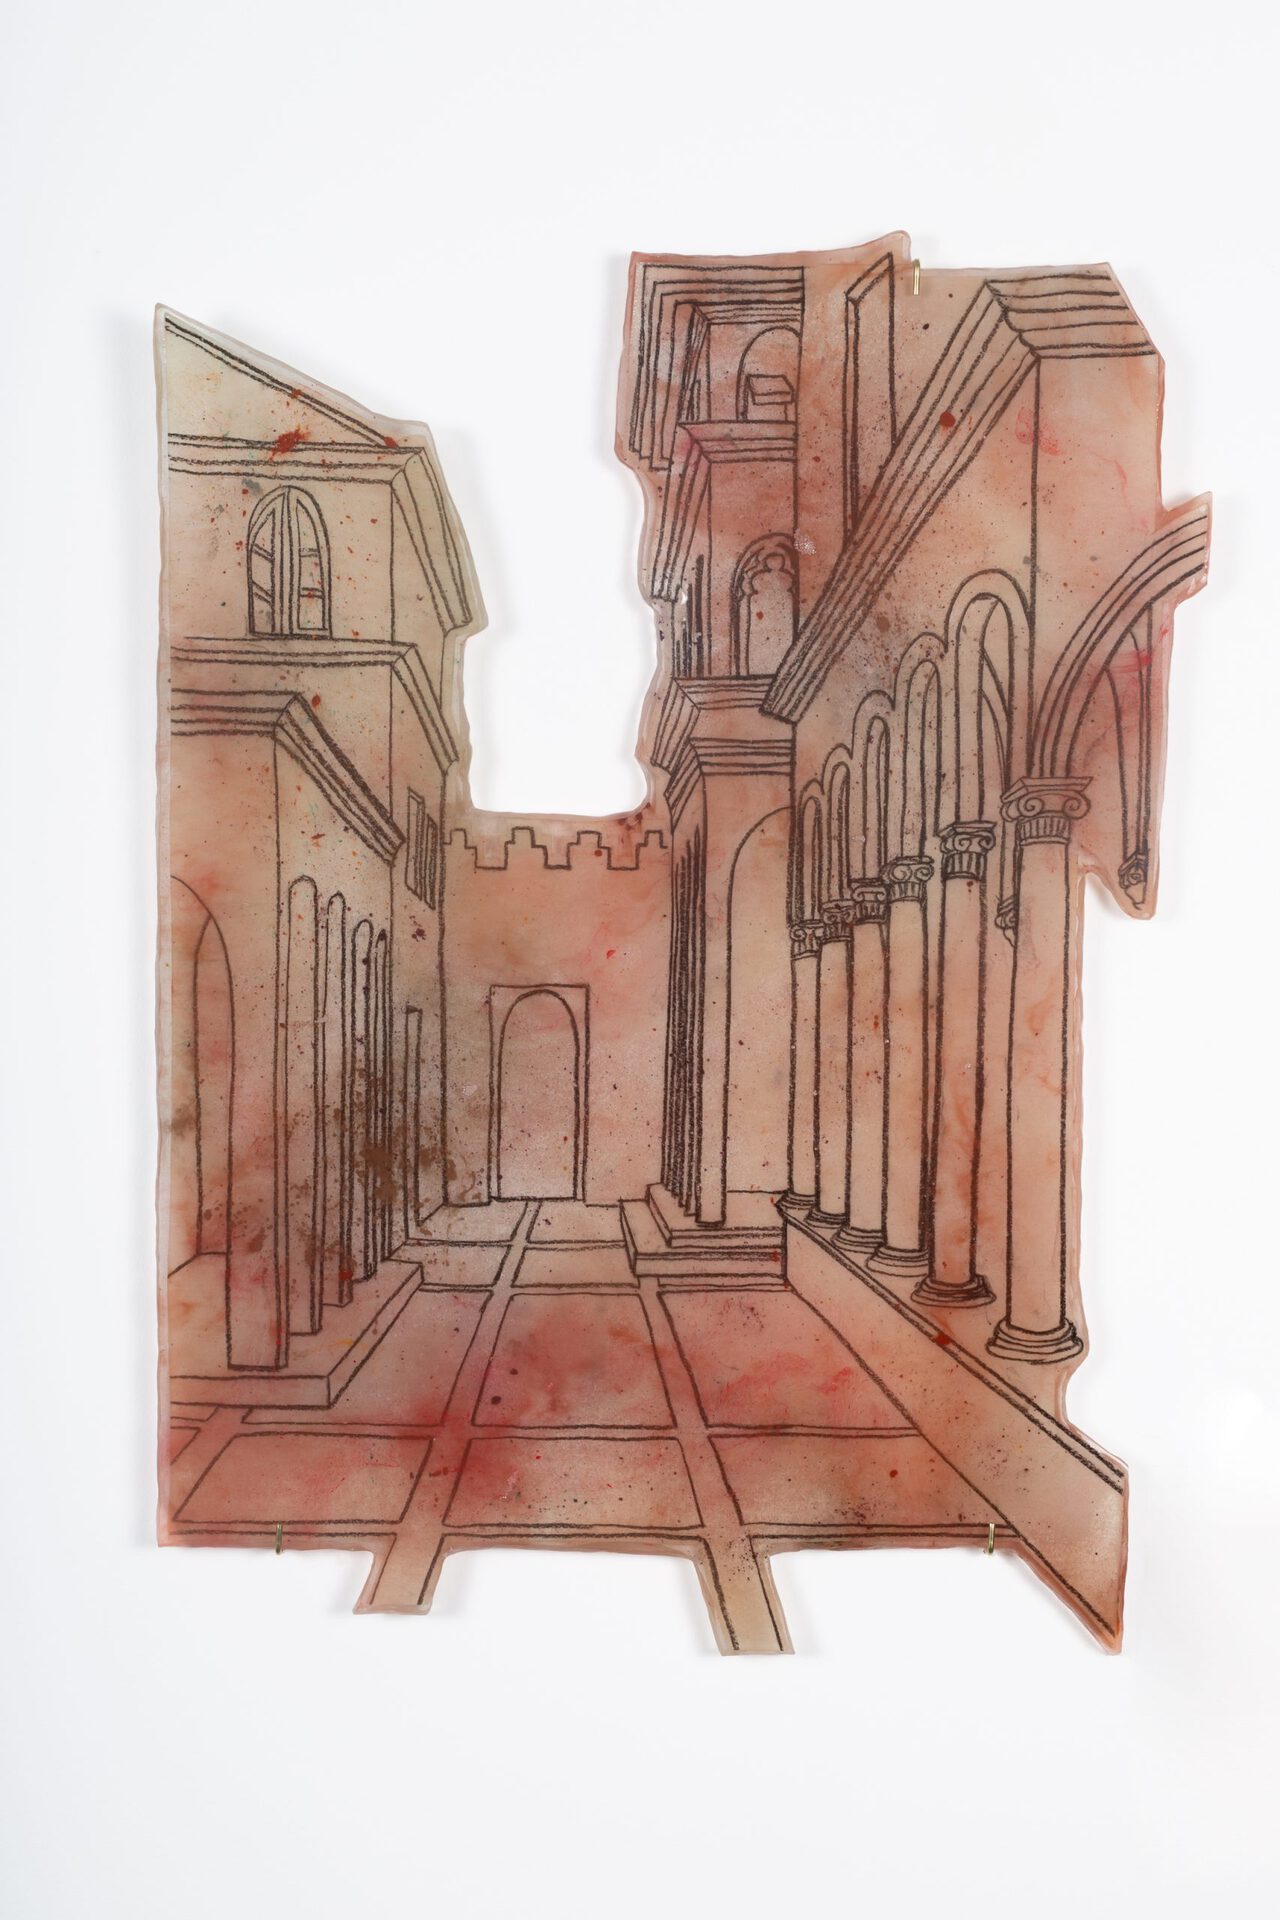 Zuzanna Czebatul, Bartolomeo, 2020, resin, handcrafted paper, coal, pigments, 63,5 x 47,5 cm